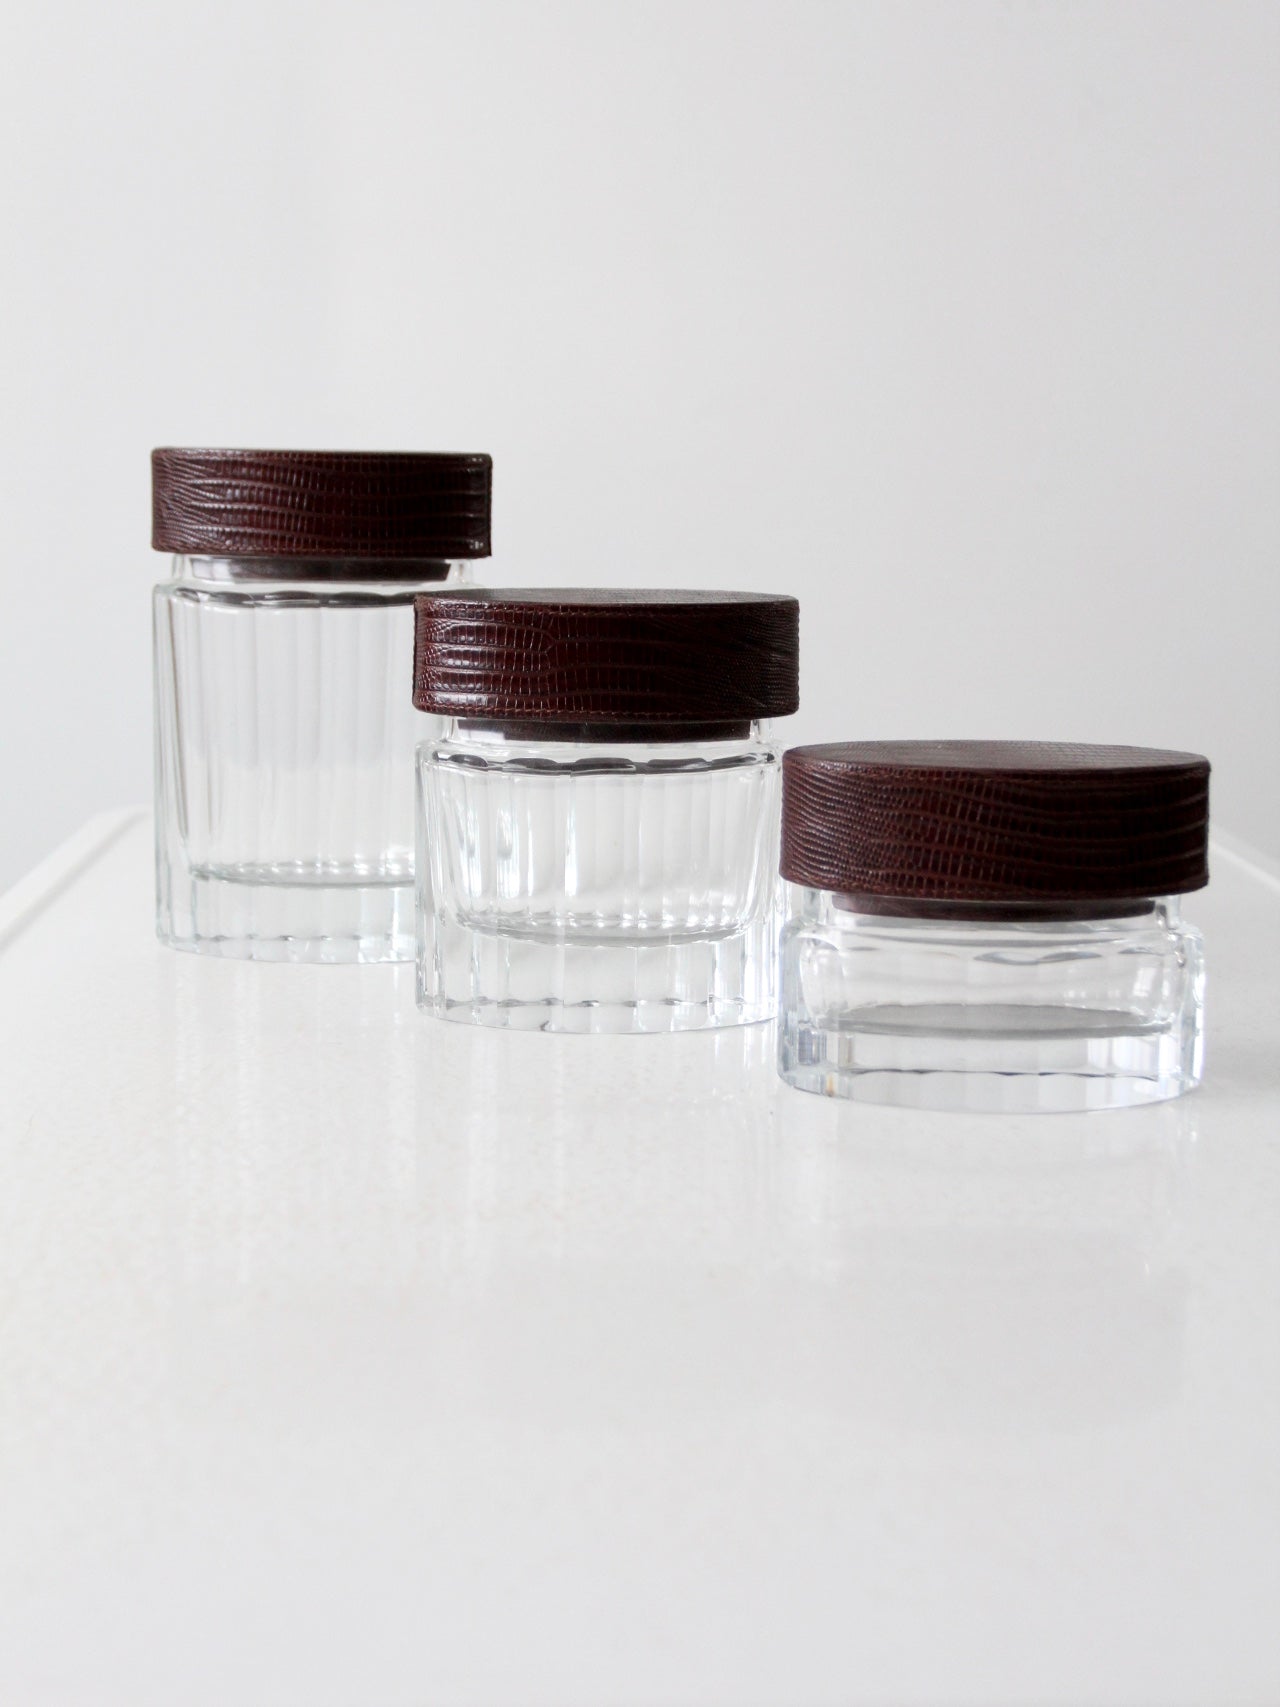 vintage glass jars with leather lids set of 3